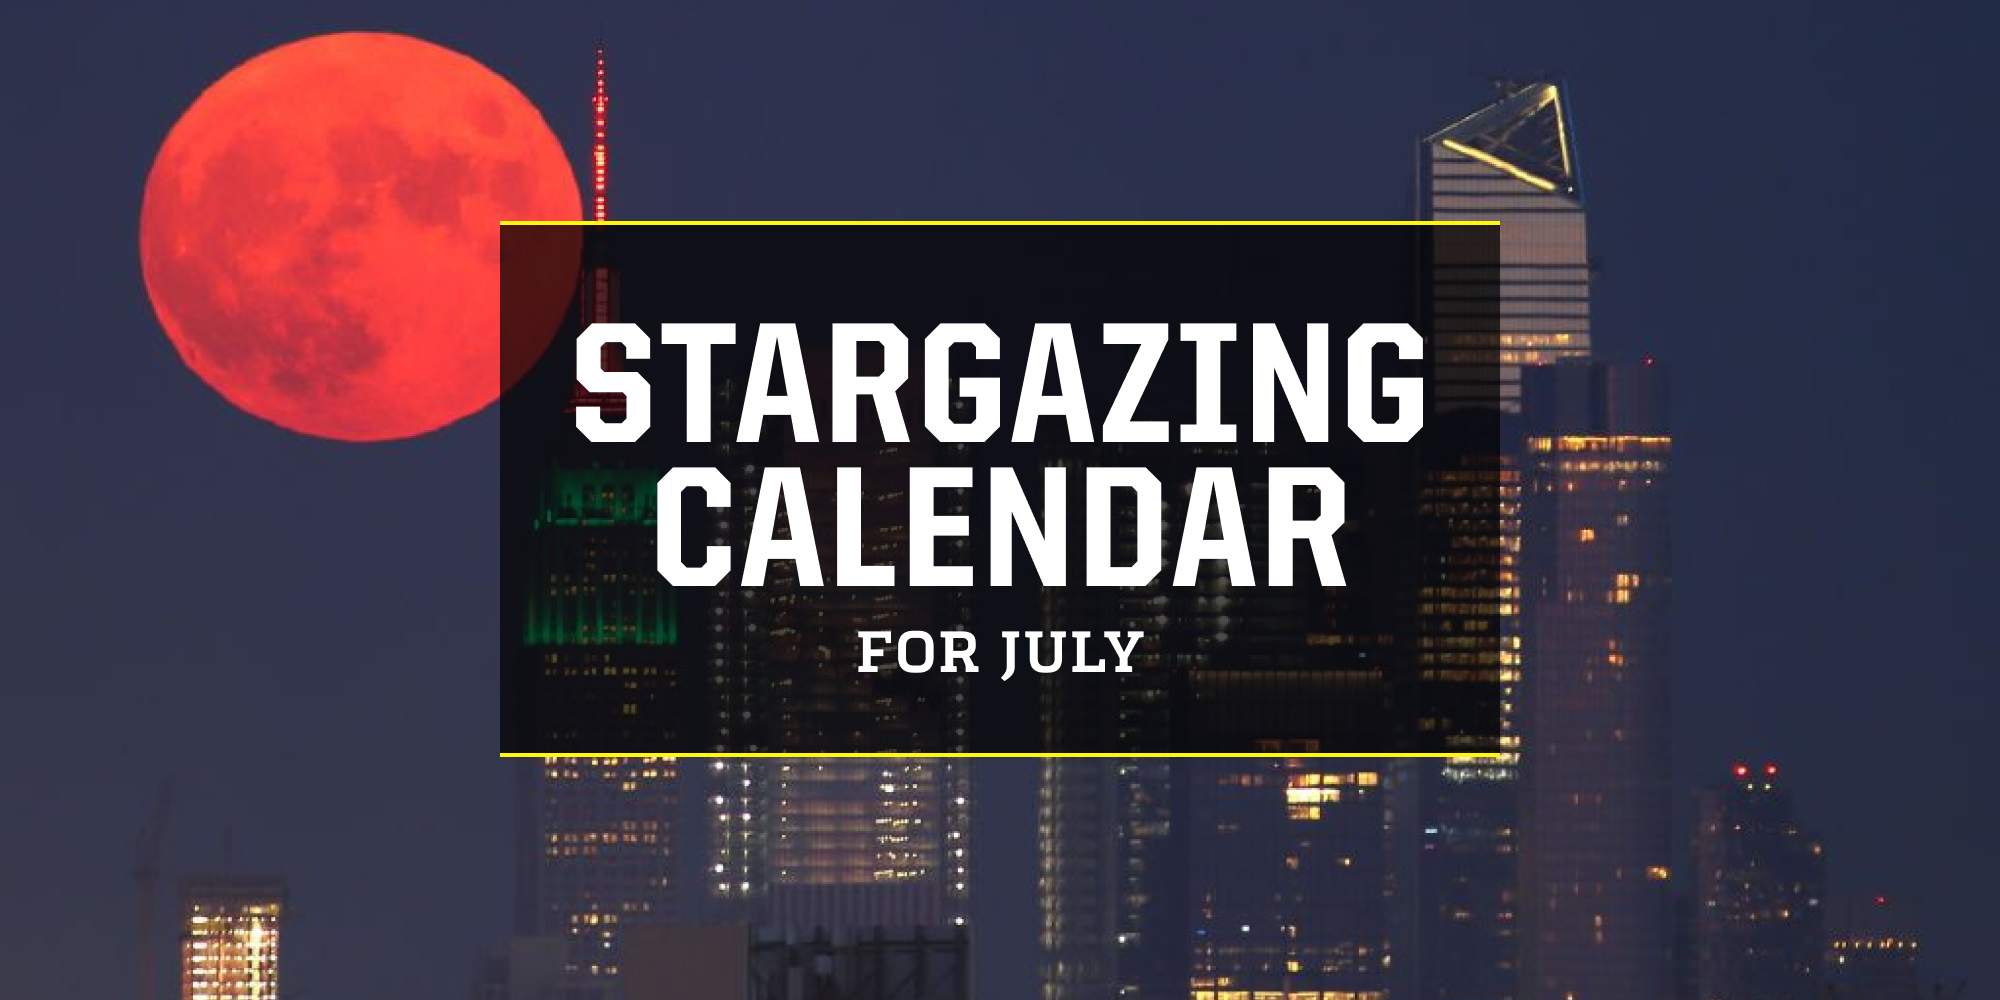 Your Stargazing Calendar for July 2022